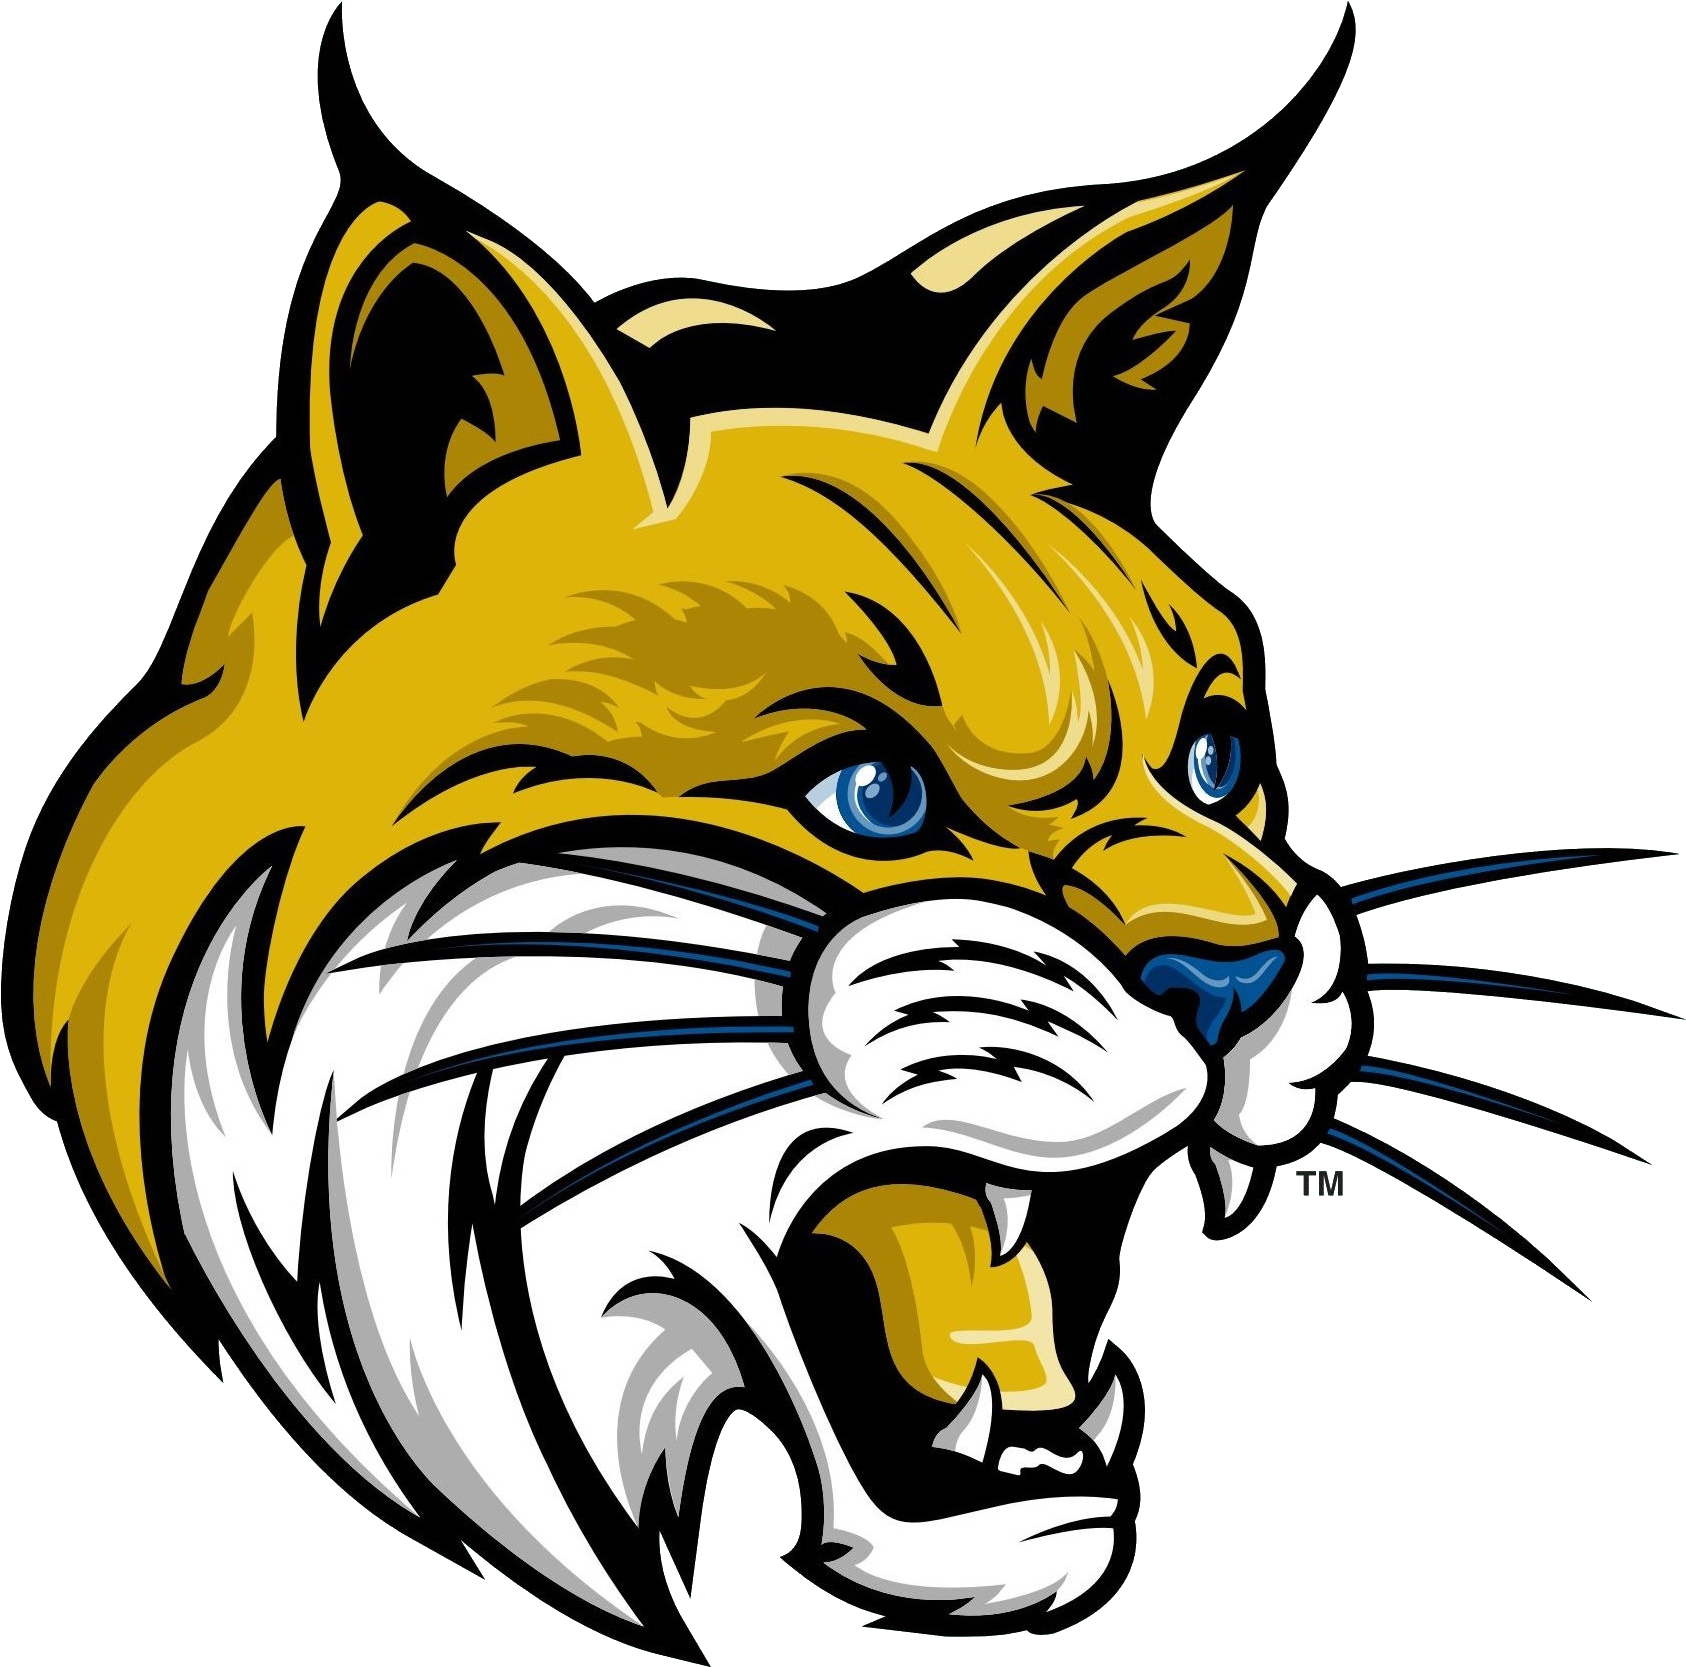 Uc Merced Bobcats Logo4 - Uc Merced Bobcat Logo (1794x1765)